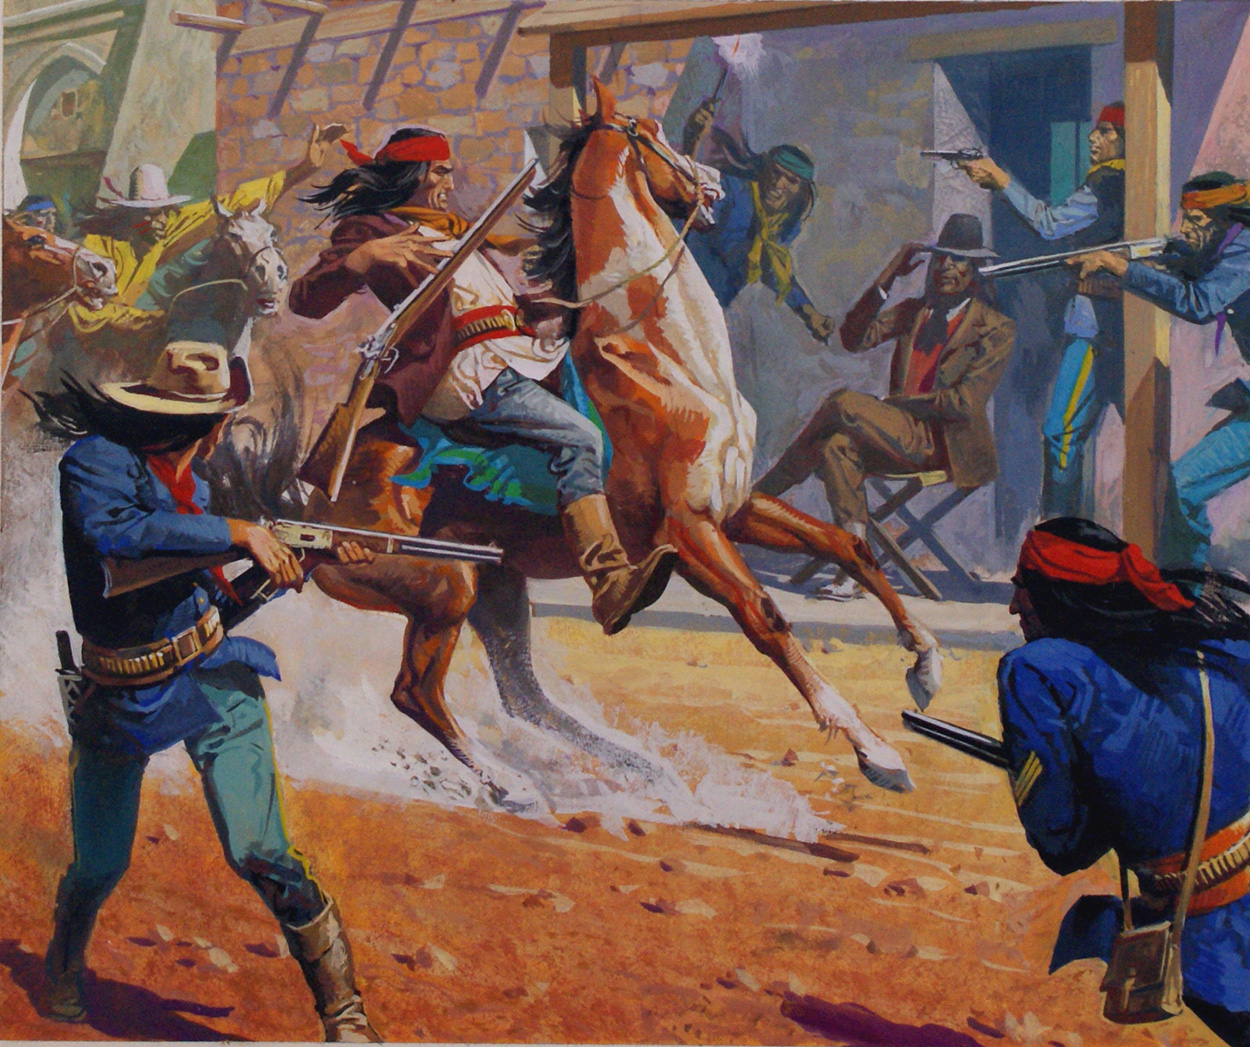 Ruckus at the Ranch (Original) art by American History (Baraldi) at The Illustration Art Gallery